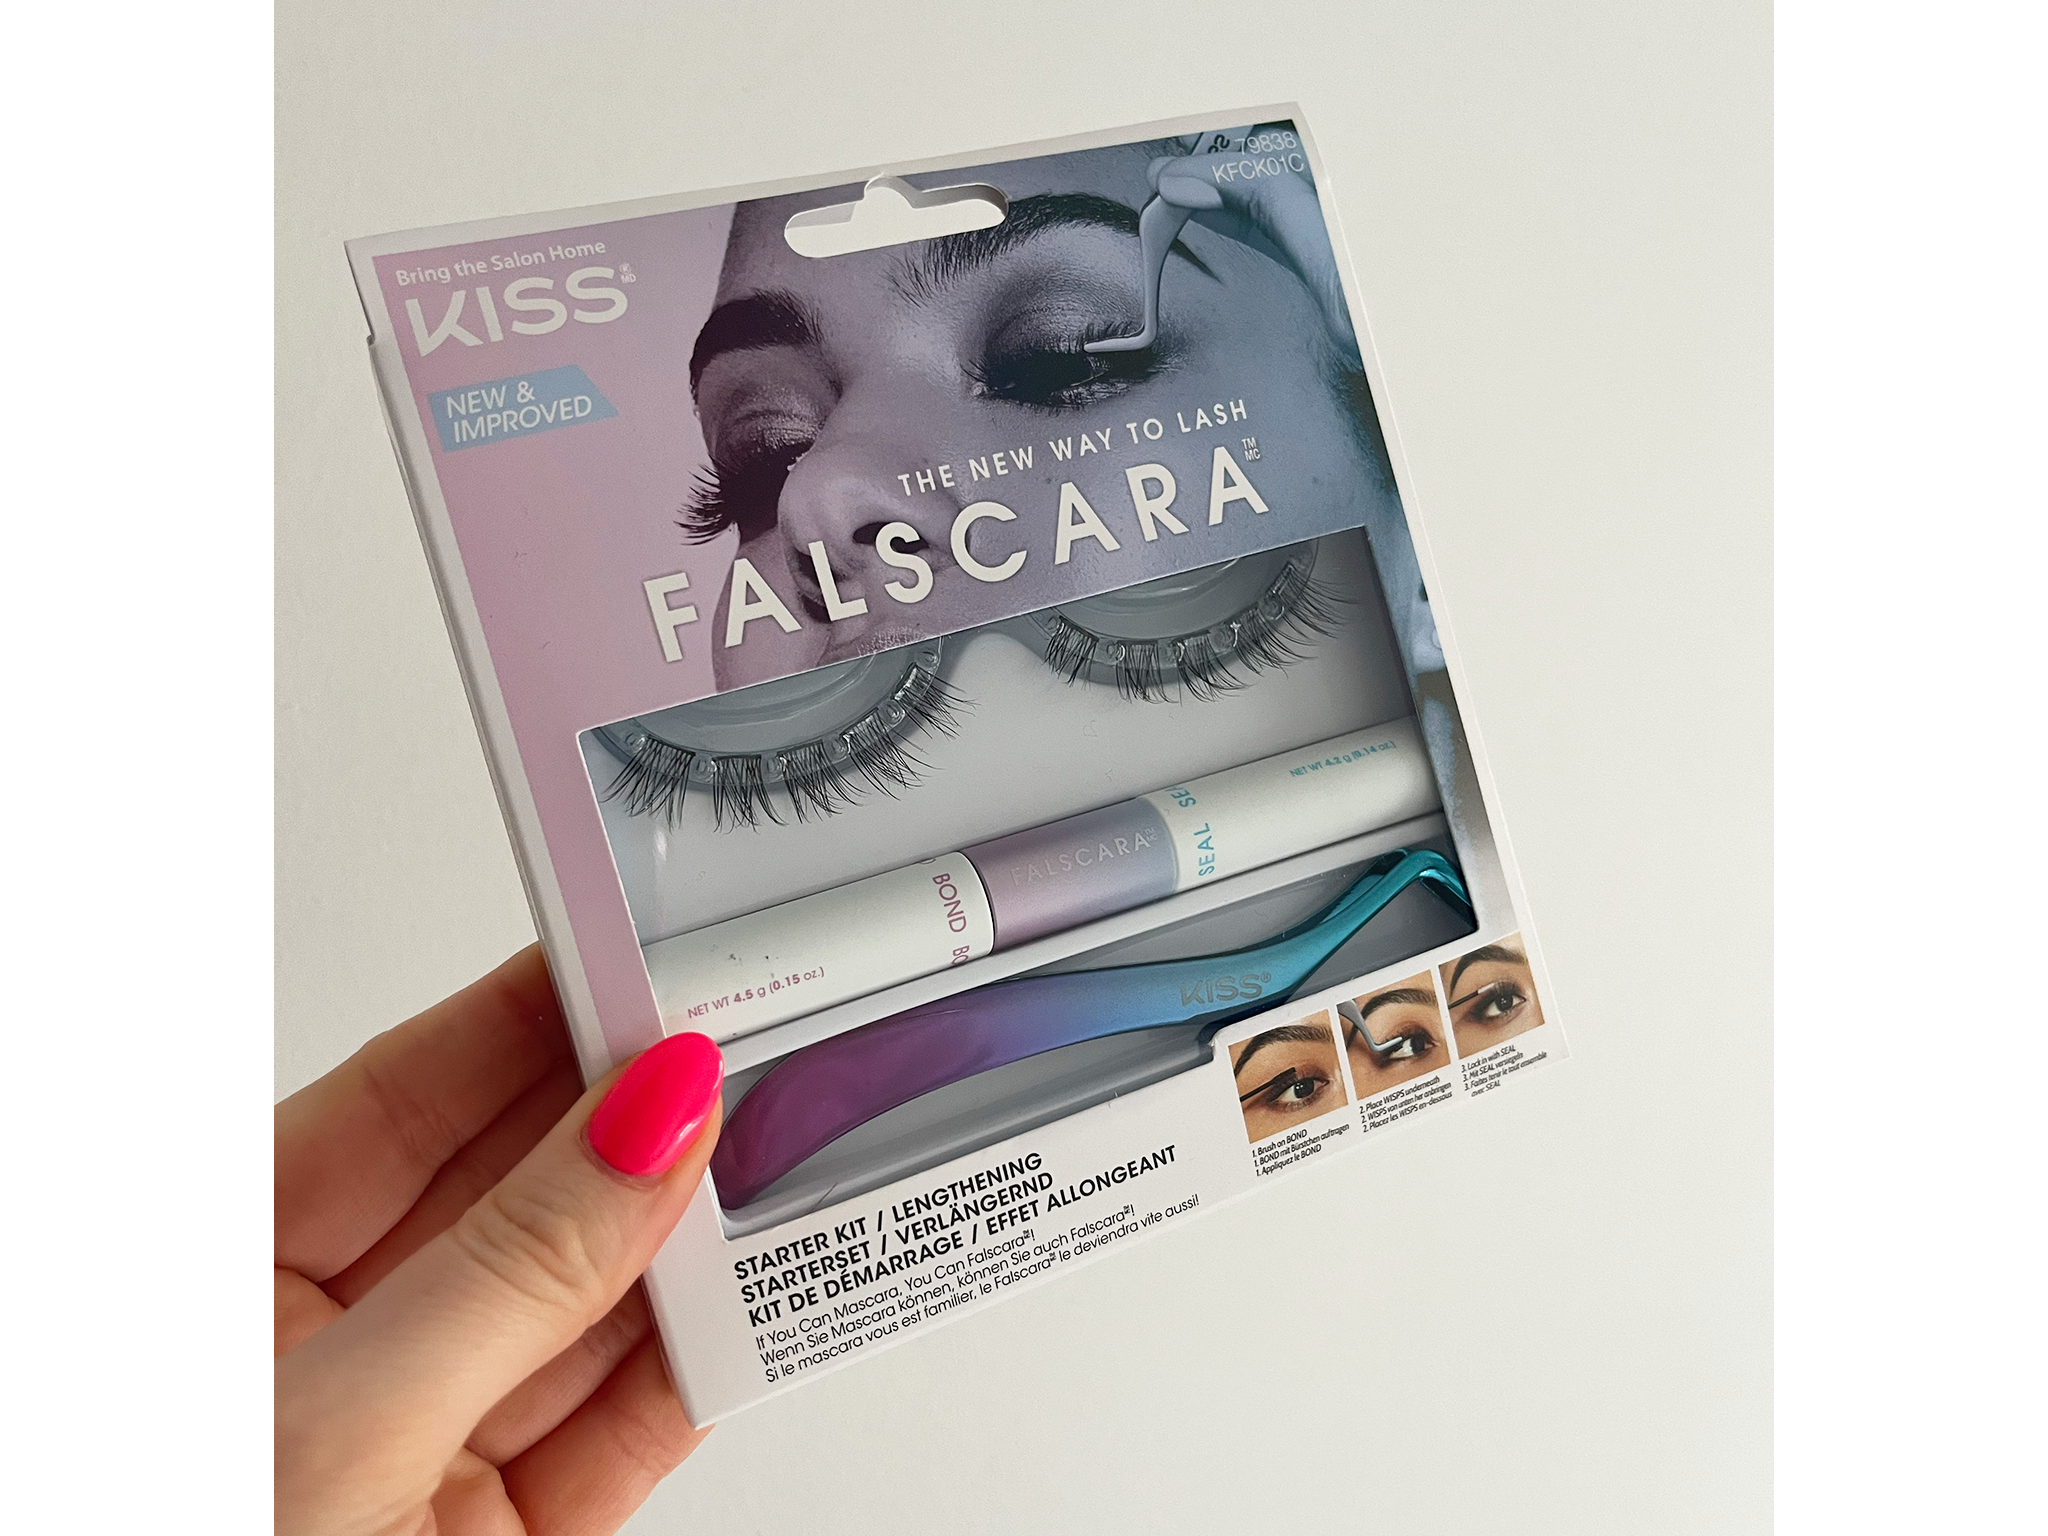 Kiss falscara false eyelashes starter kit